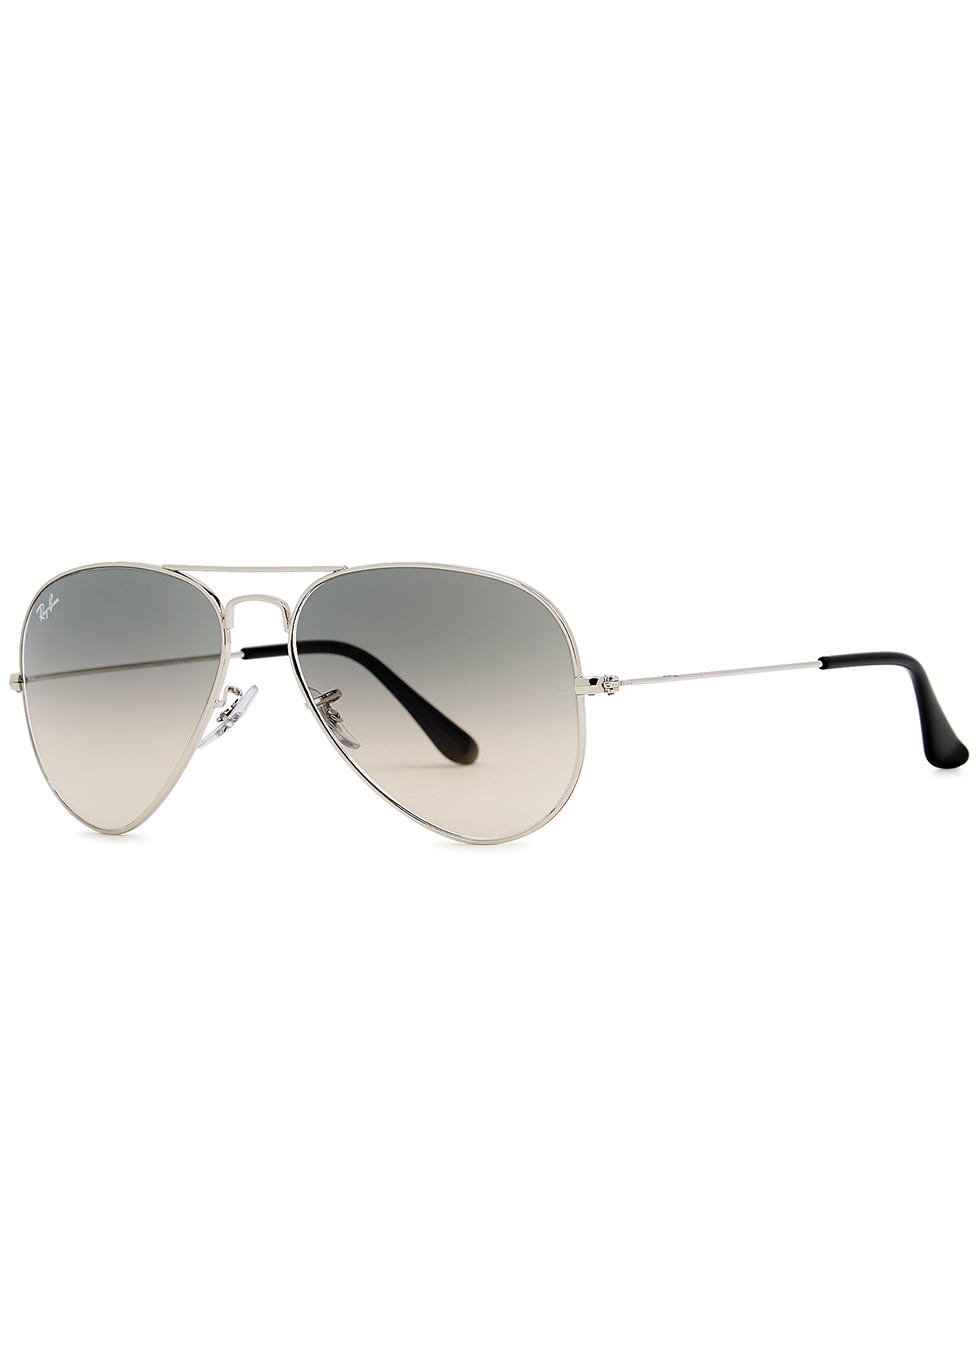 ray ban silver sunglasses